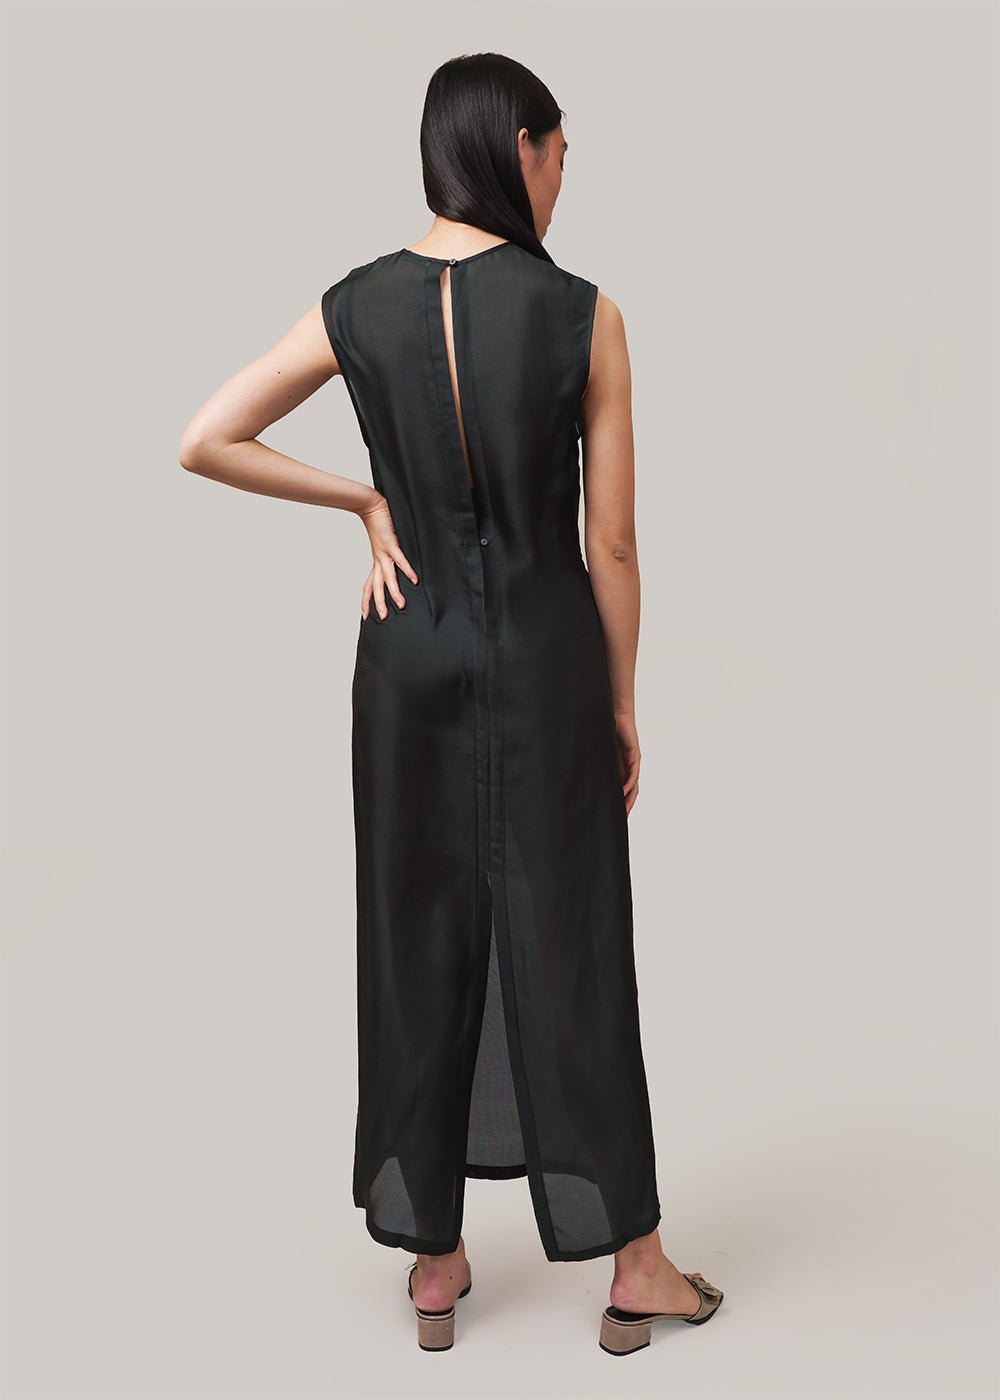 St. Agni Soot Sheer Silk Gauze Dress - New Classics Studios Sustainable Ethical Fashion Canada